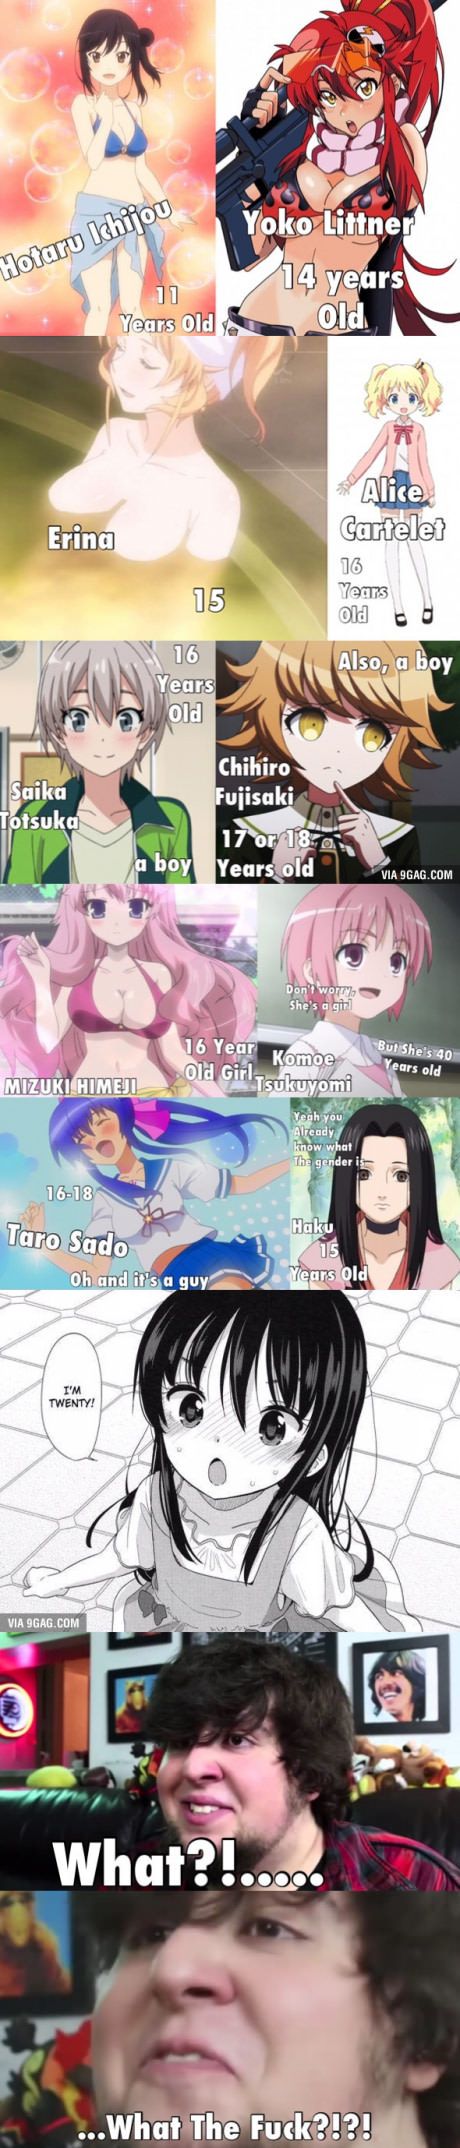 Anime Logic At Its 